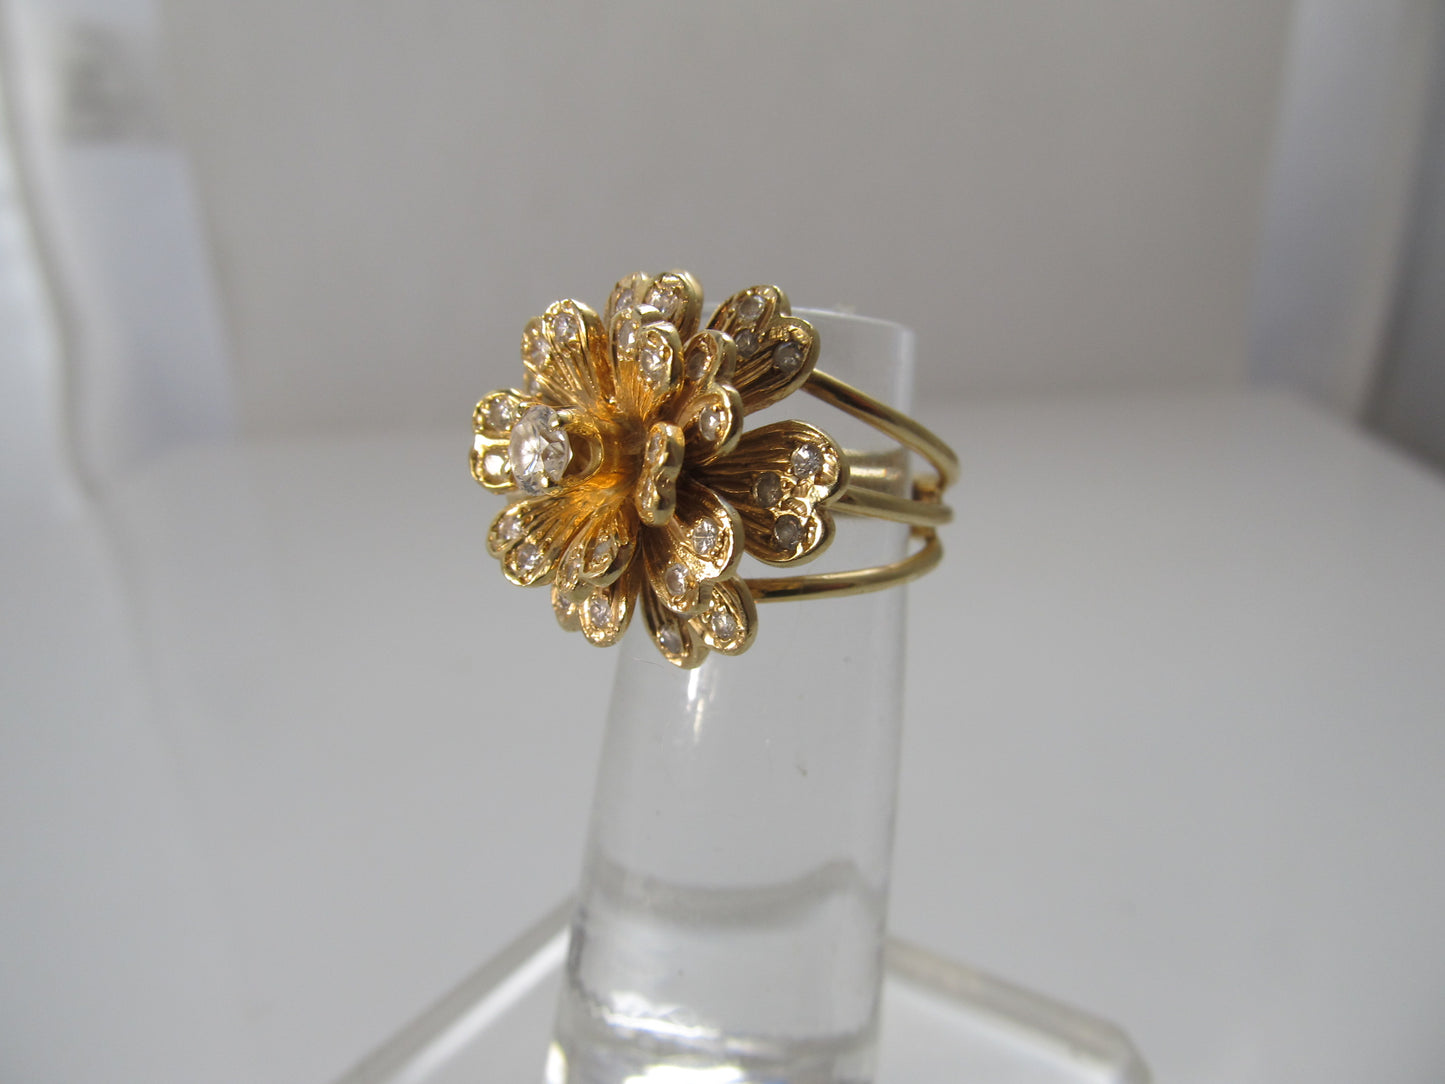 1ct TW diamond flower ring, 14k yellow gold